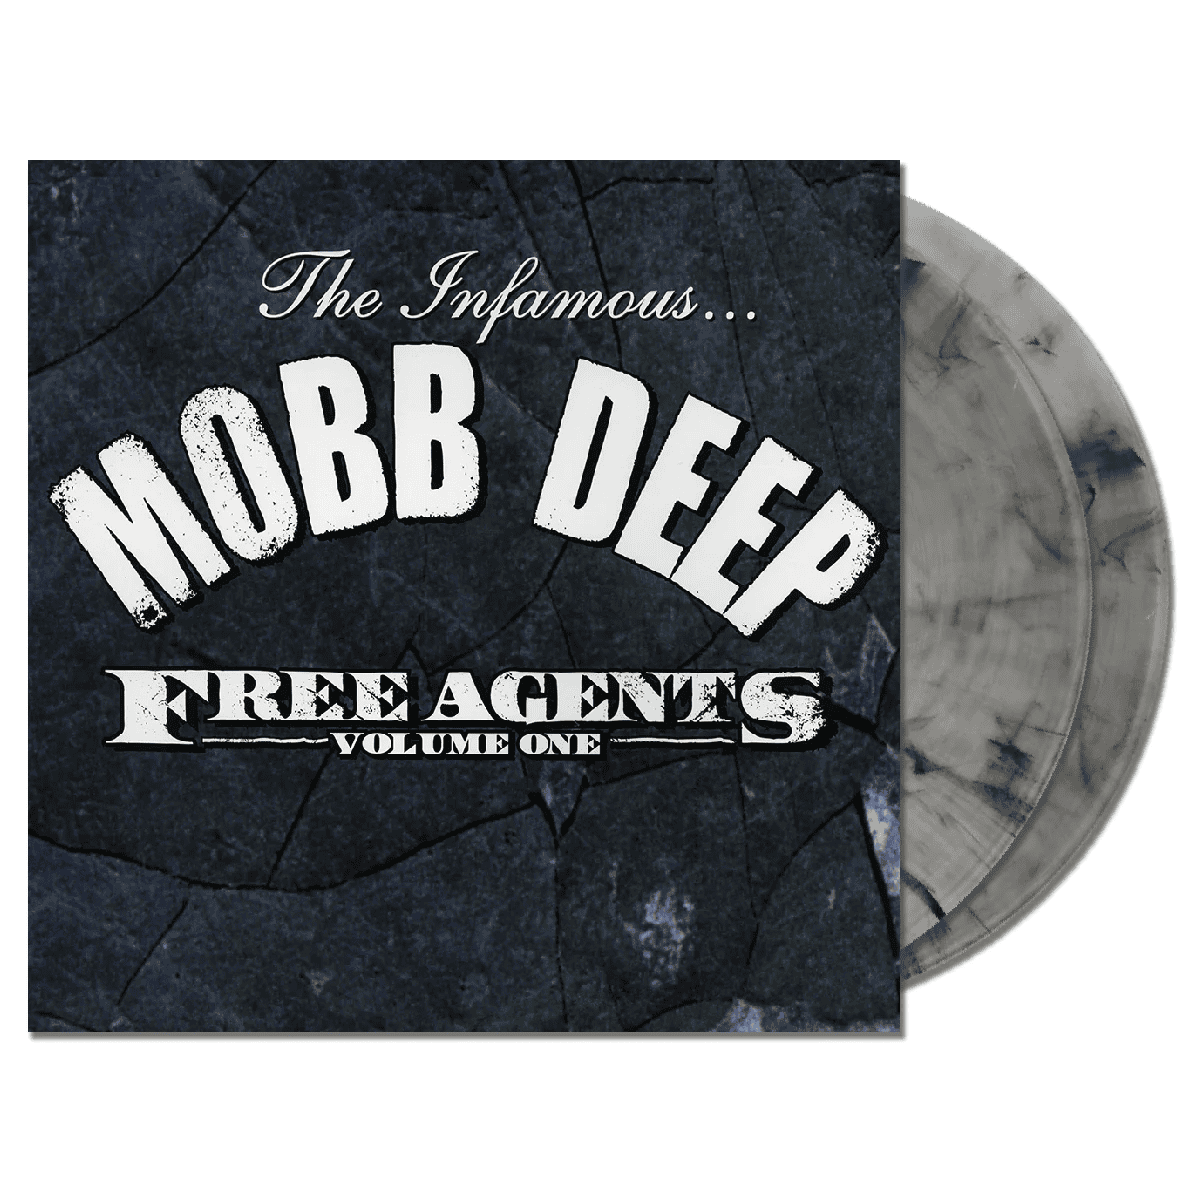 MOBB DEEP - Free Agents: Volume One Vinyl - JWrayRecords